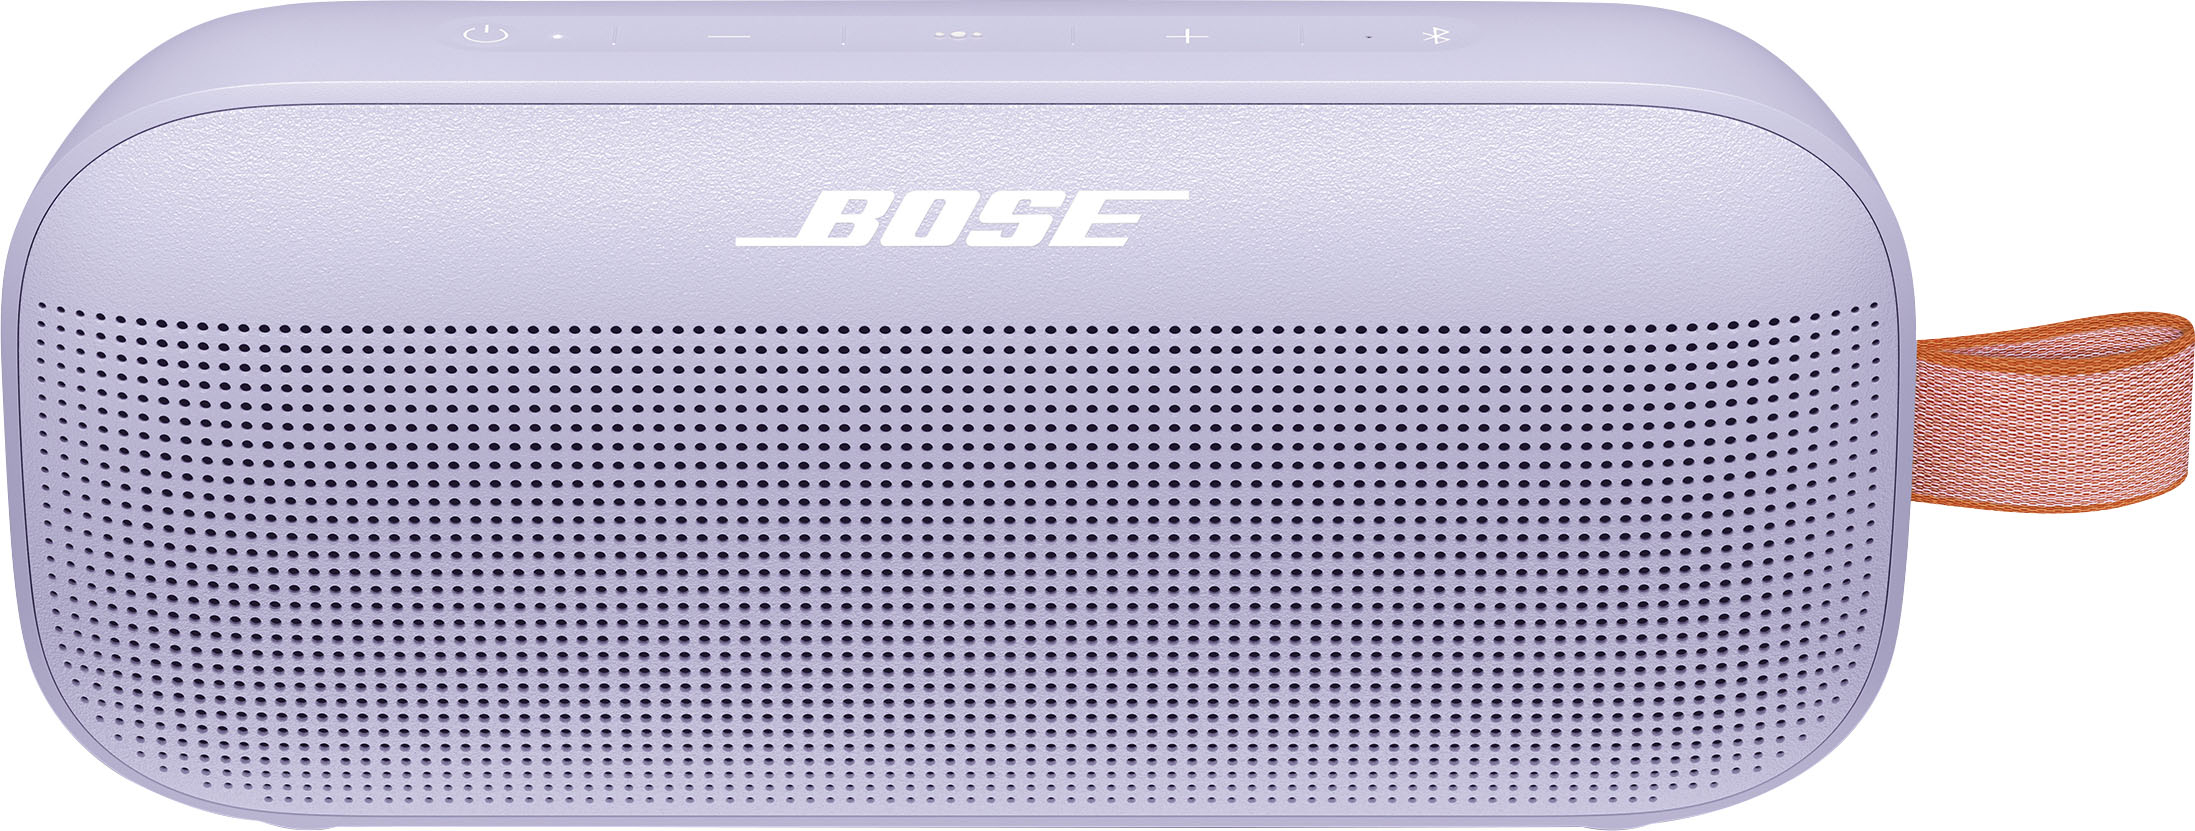 Bose - SoundLink Flex Portable Bluetooth Speaker with Waterproof/Dustproof Design - Chilled Lilac